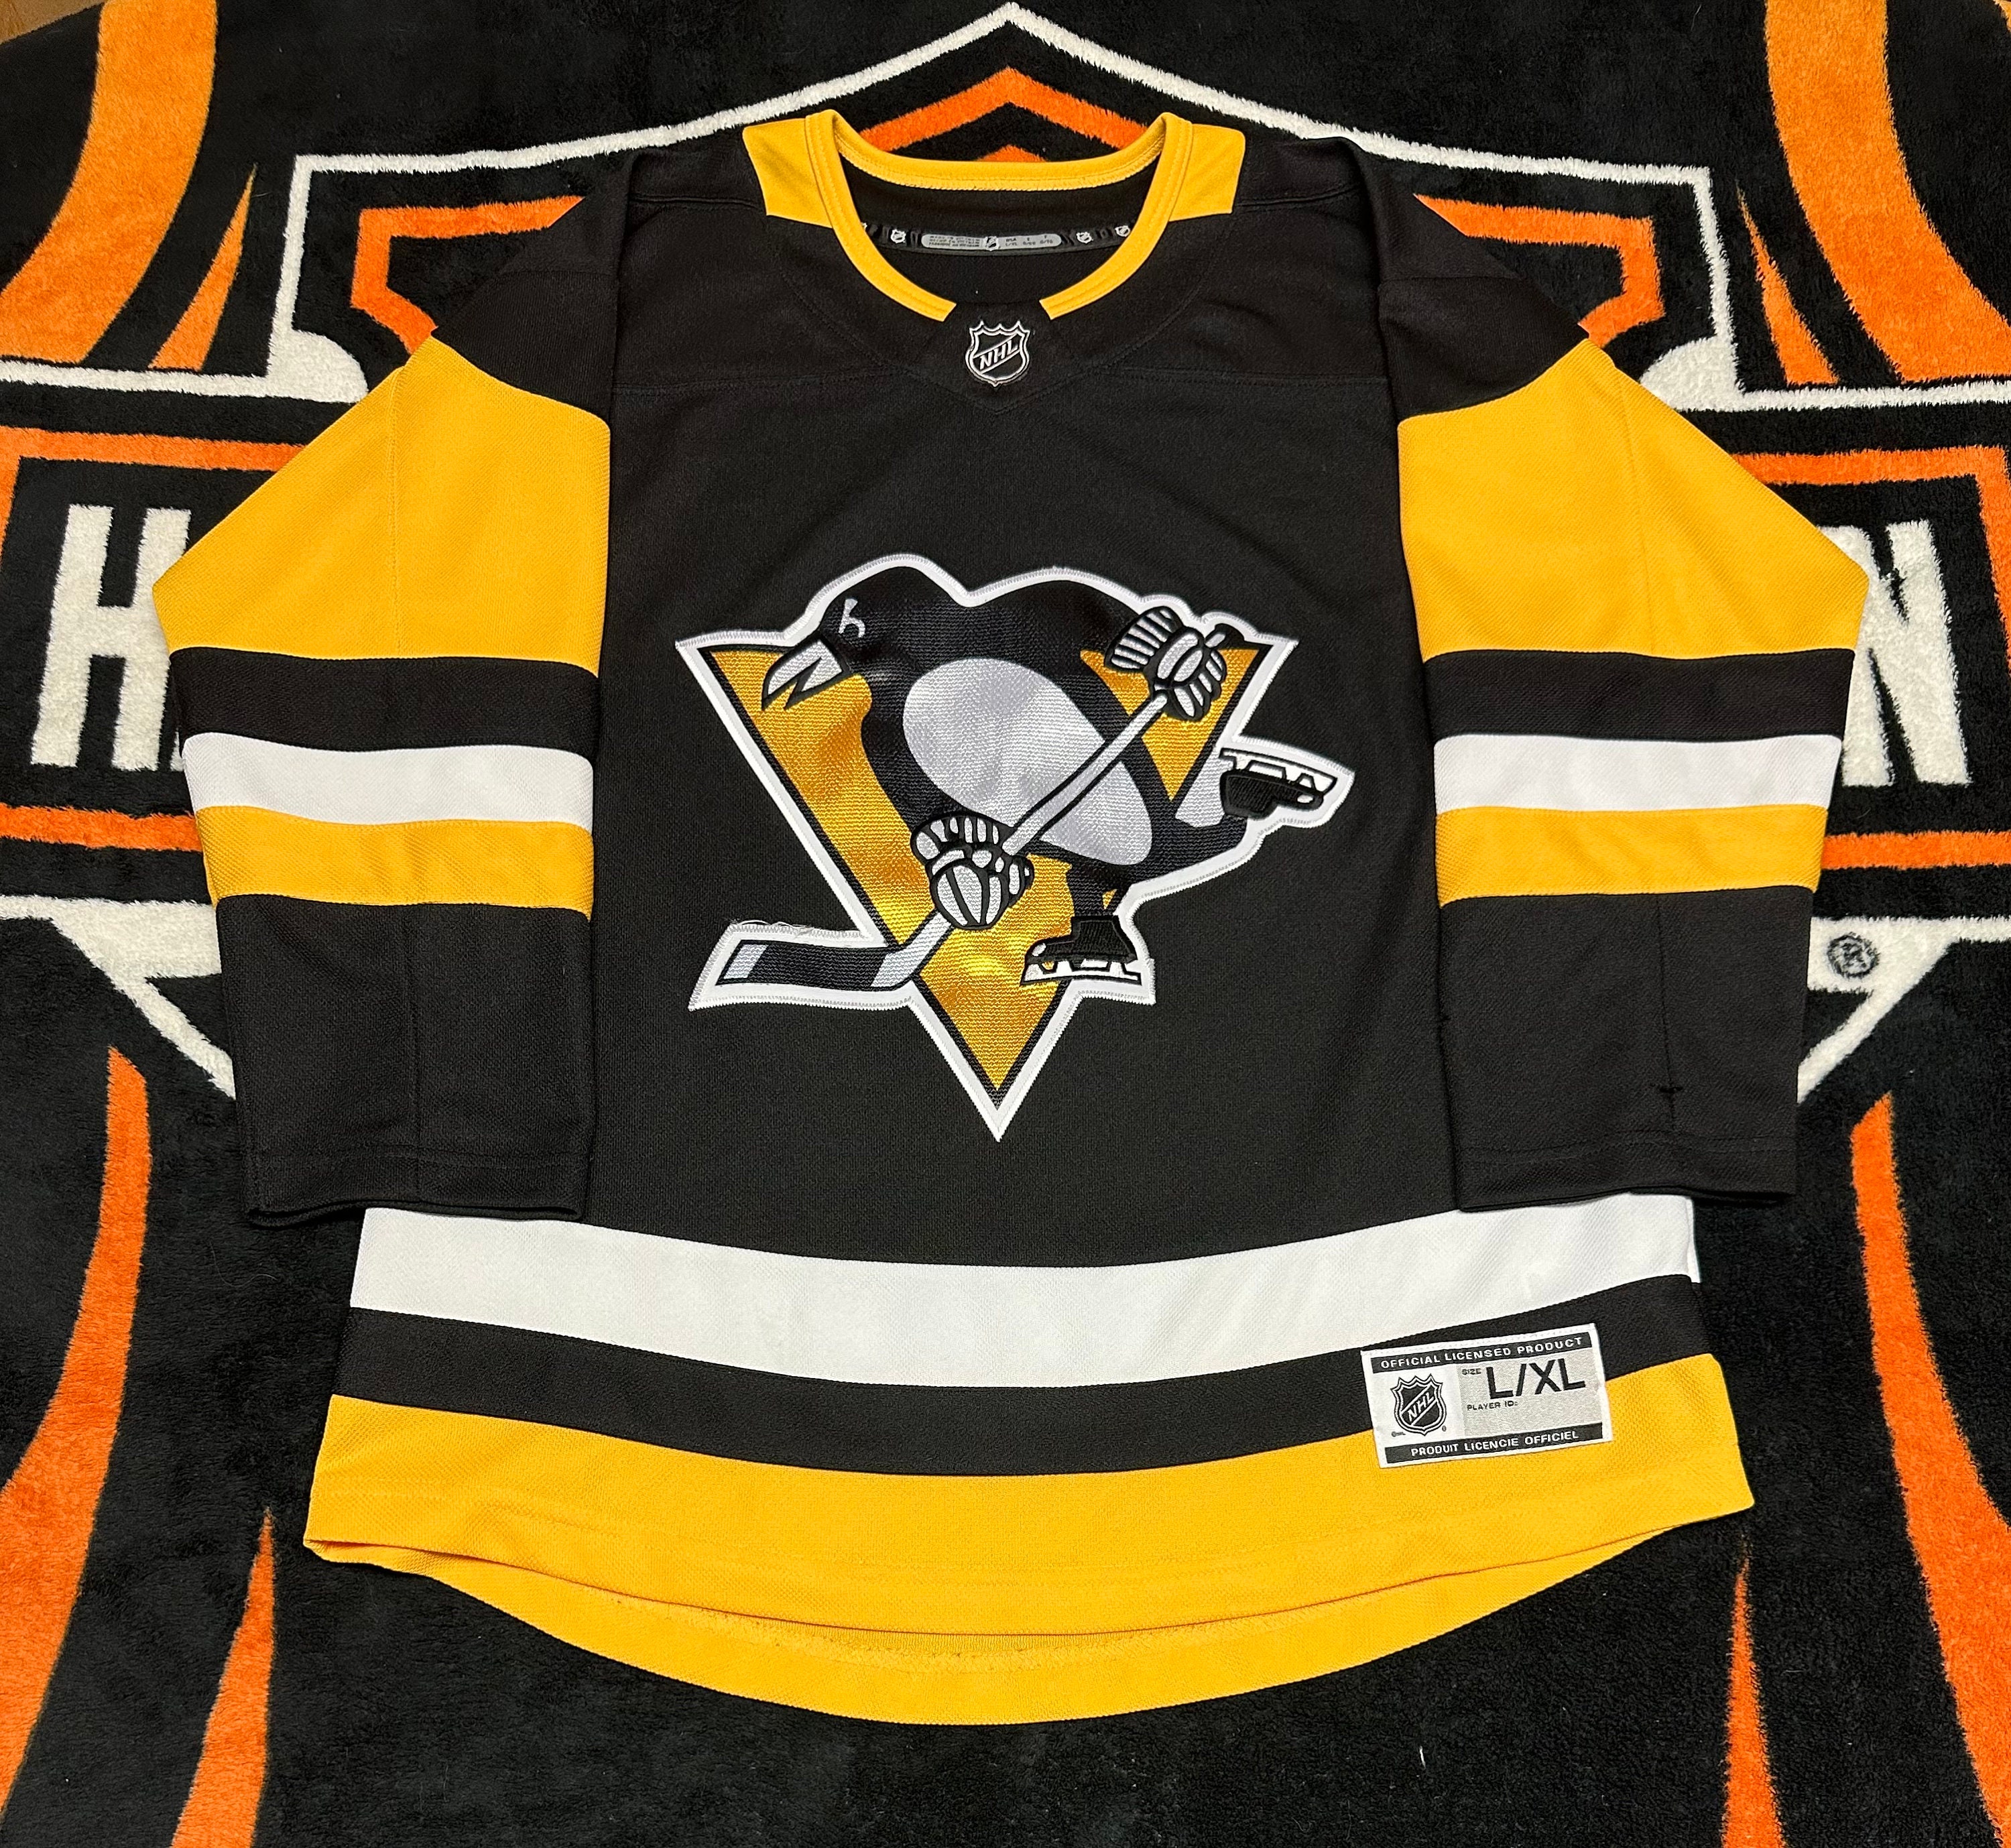 Reebok NHL Jersey Pittsburgh Penguins Evgeni Malkin Black Size Youth L/XL  Hockey